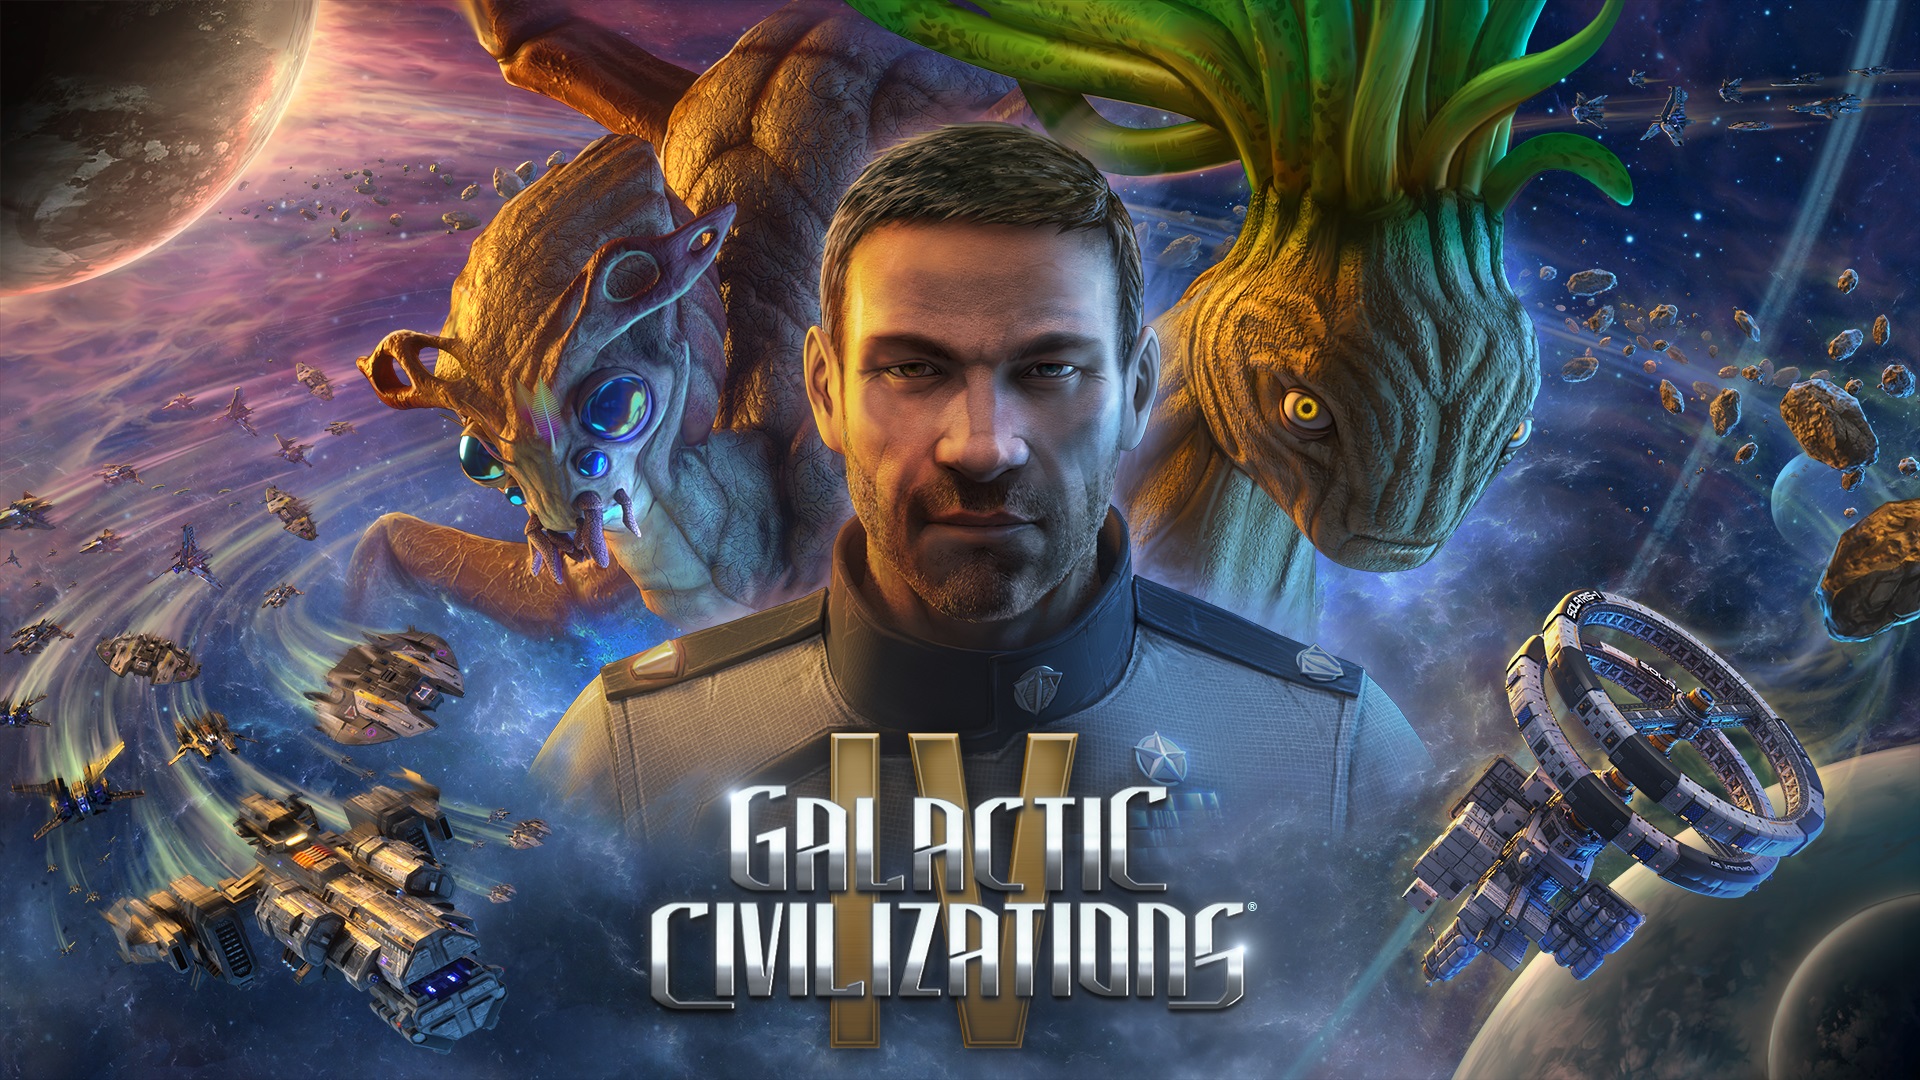 Galactic Civilizations IV Announced